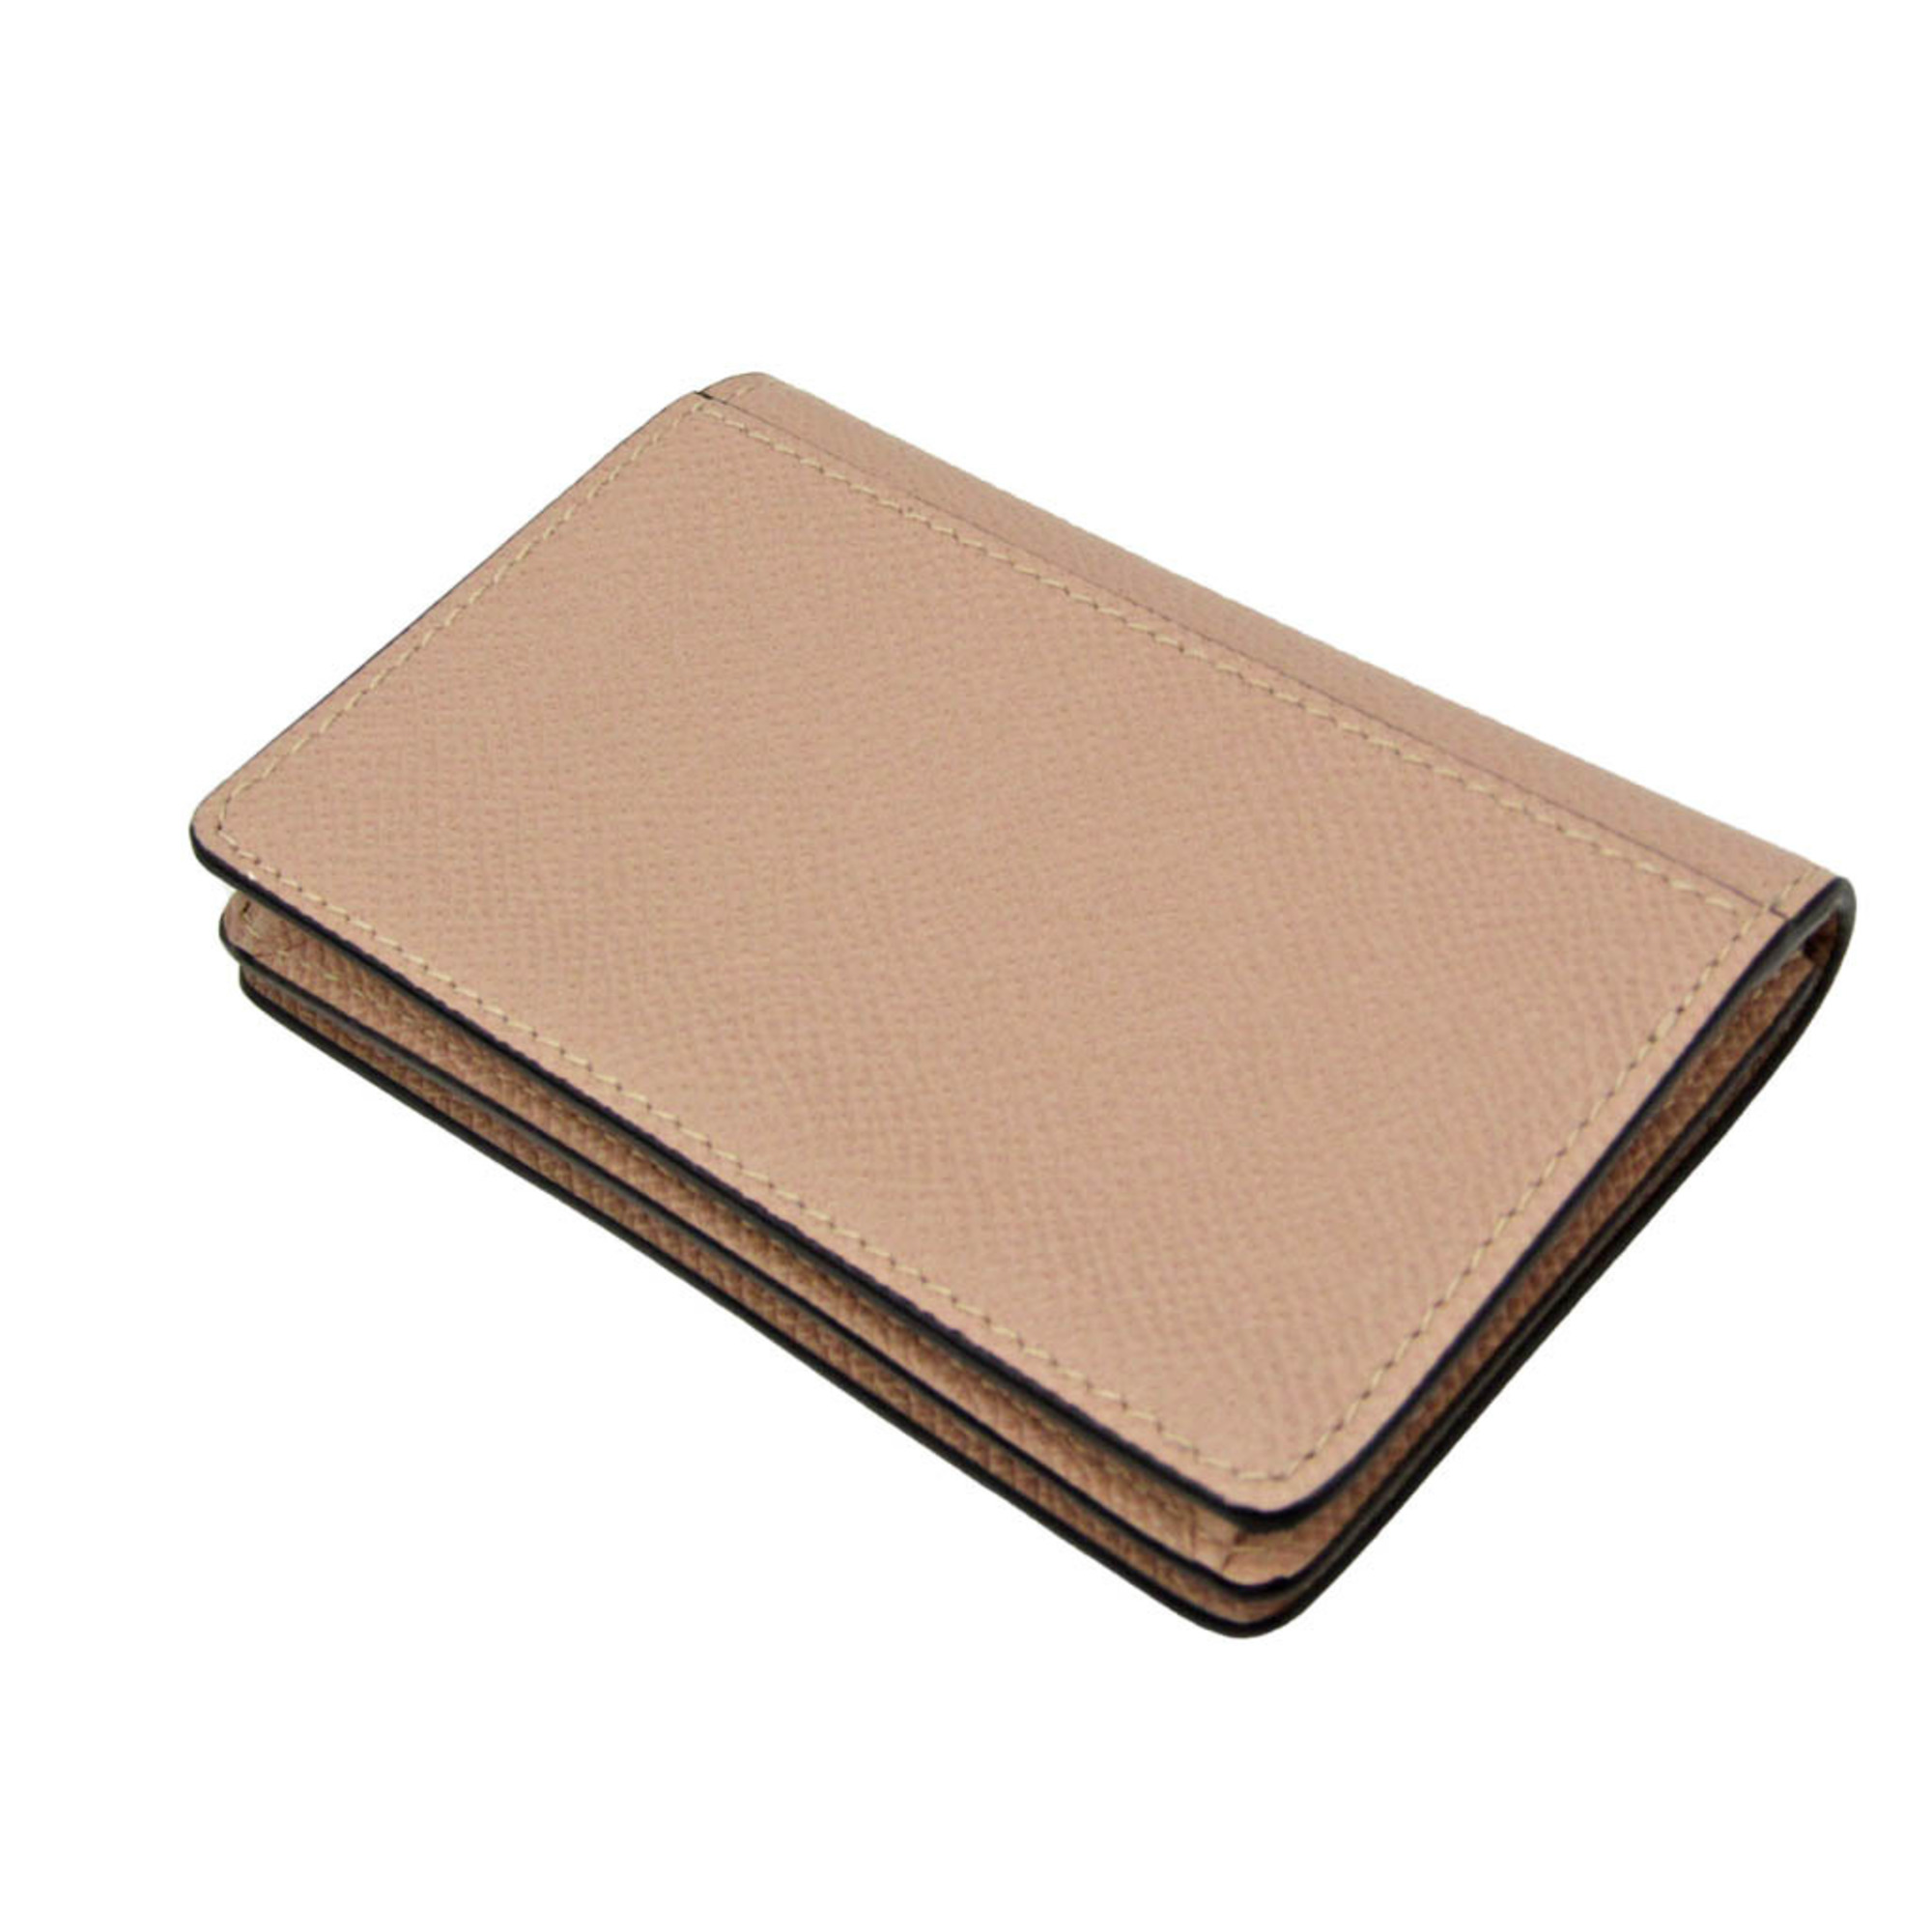 Salvatore Ferragamo Gancini IY-22 0371 Leather Card Case Pink Beige